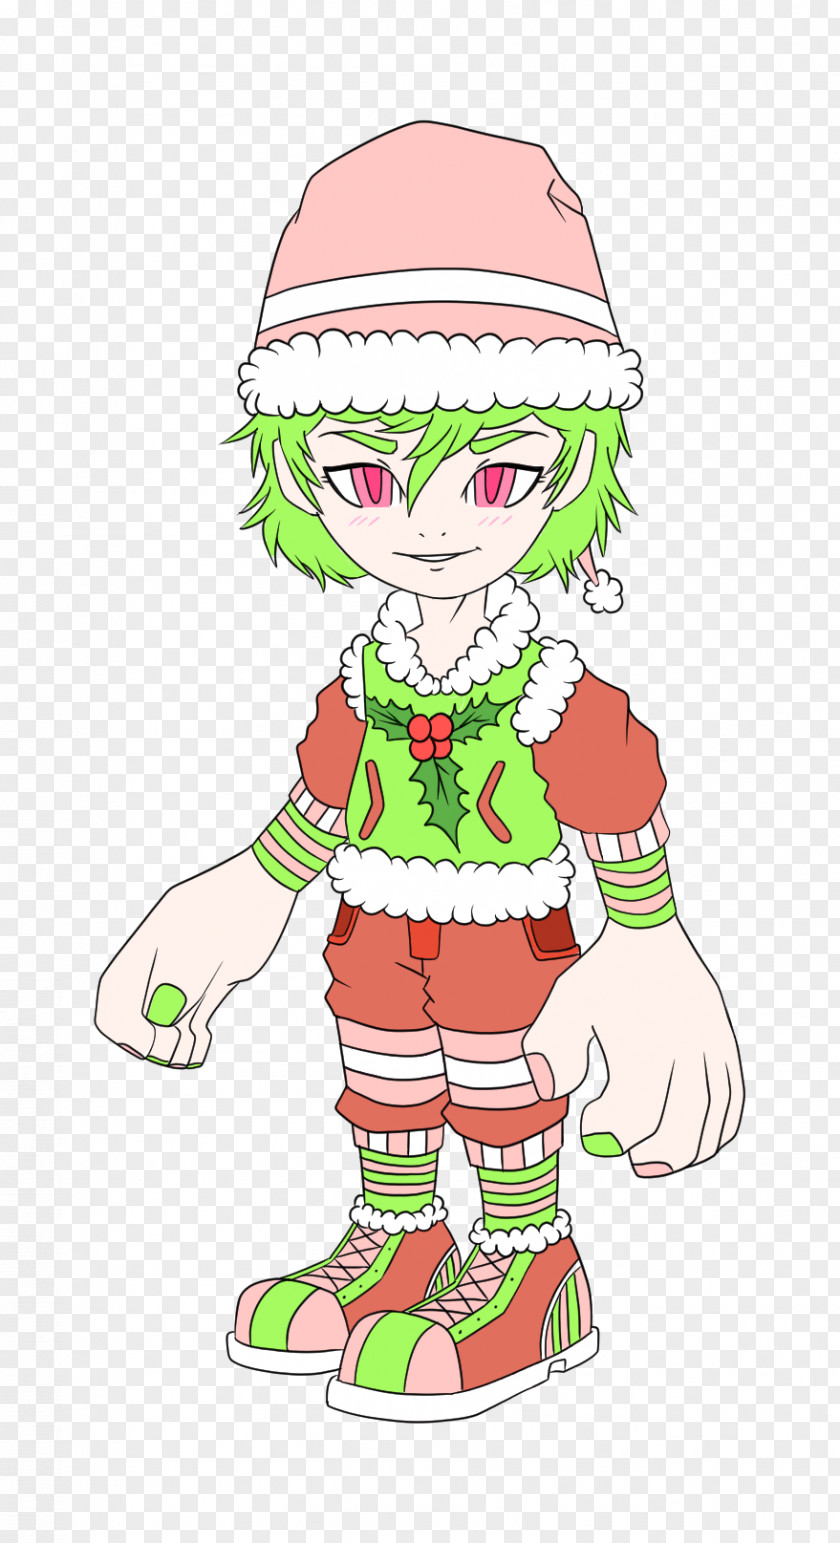 Christmas Tree Santa Claus Elf Illustration Day PNG